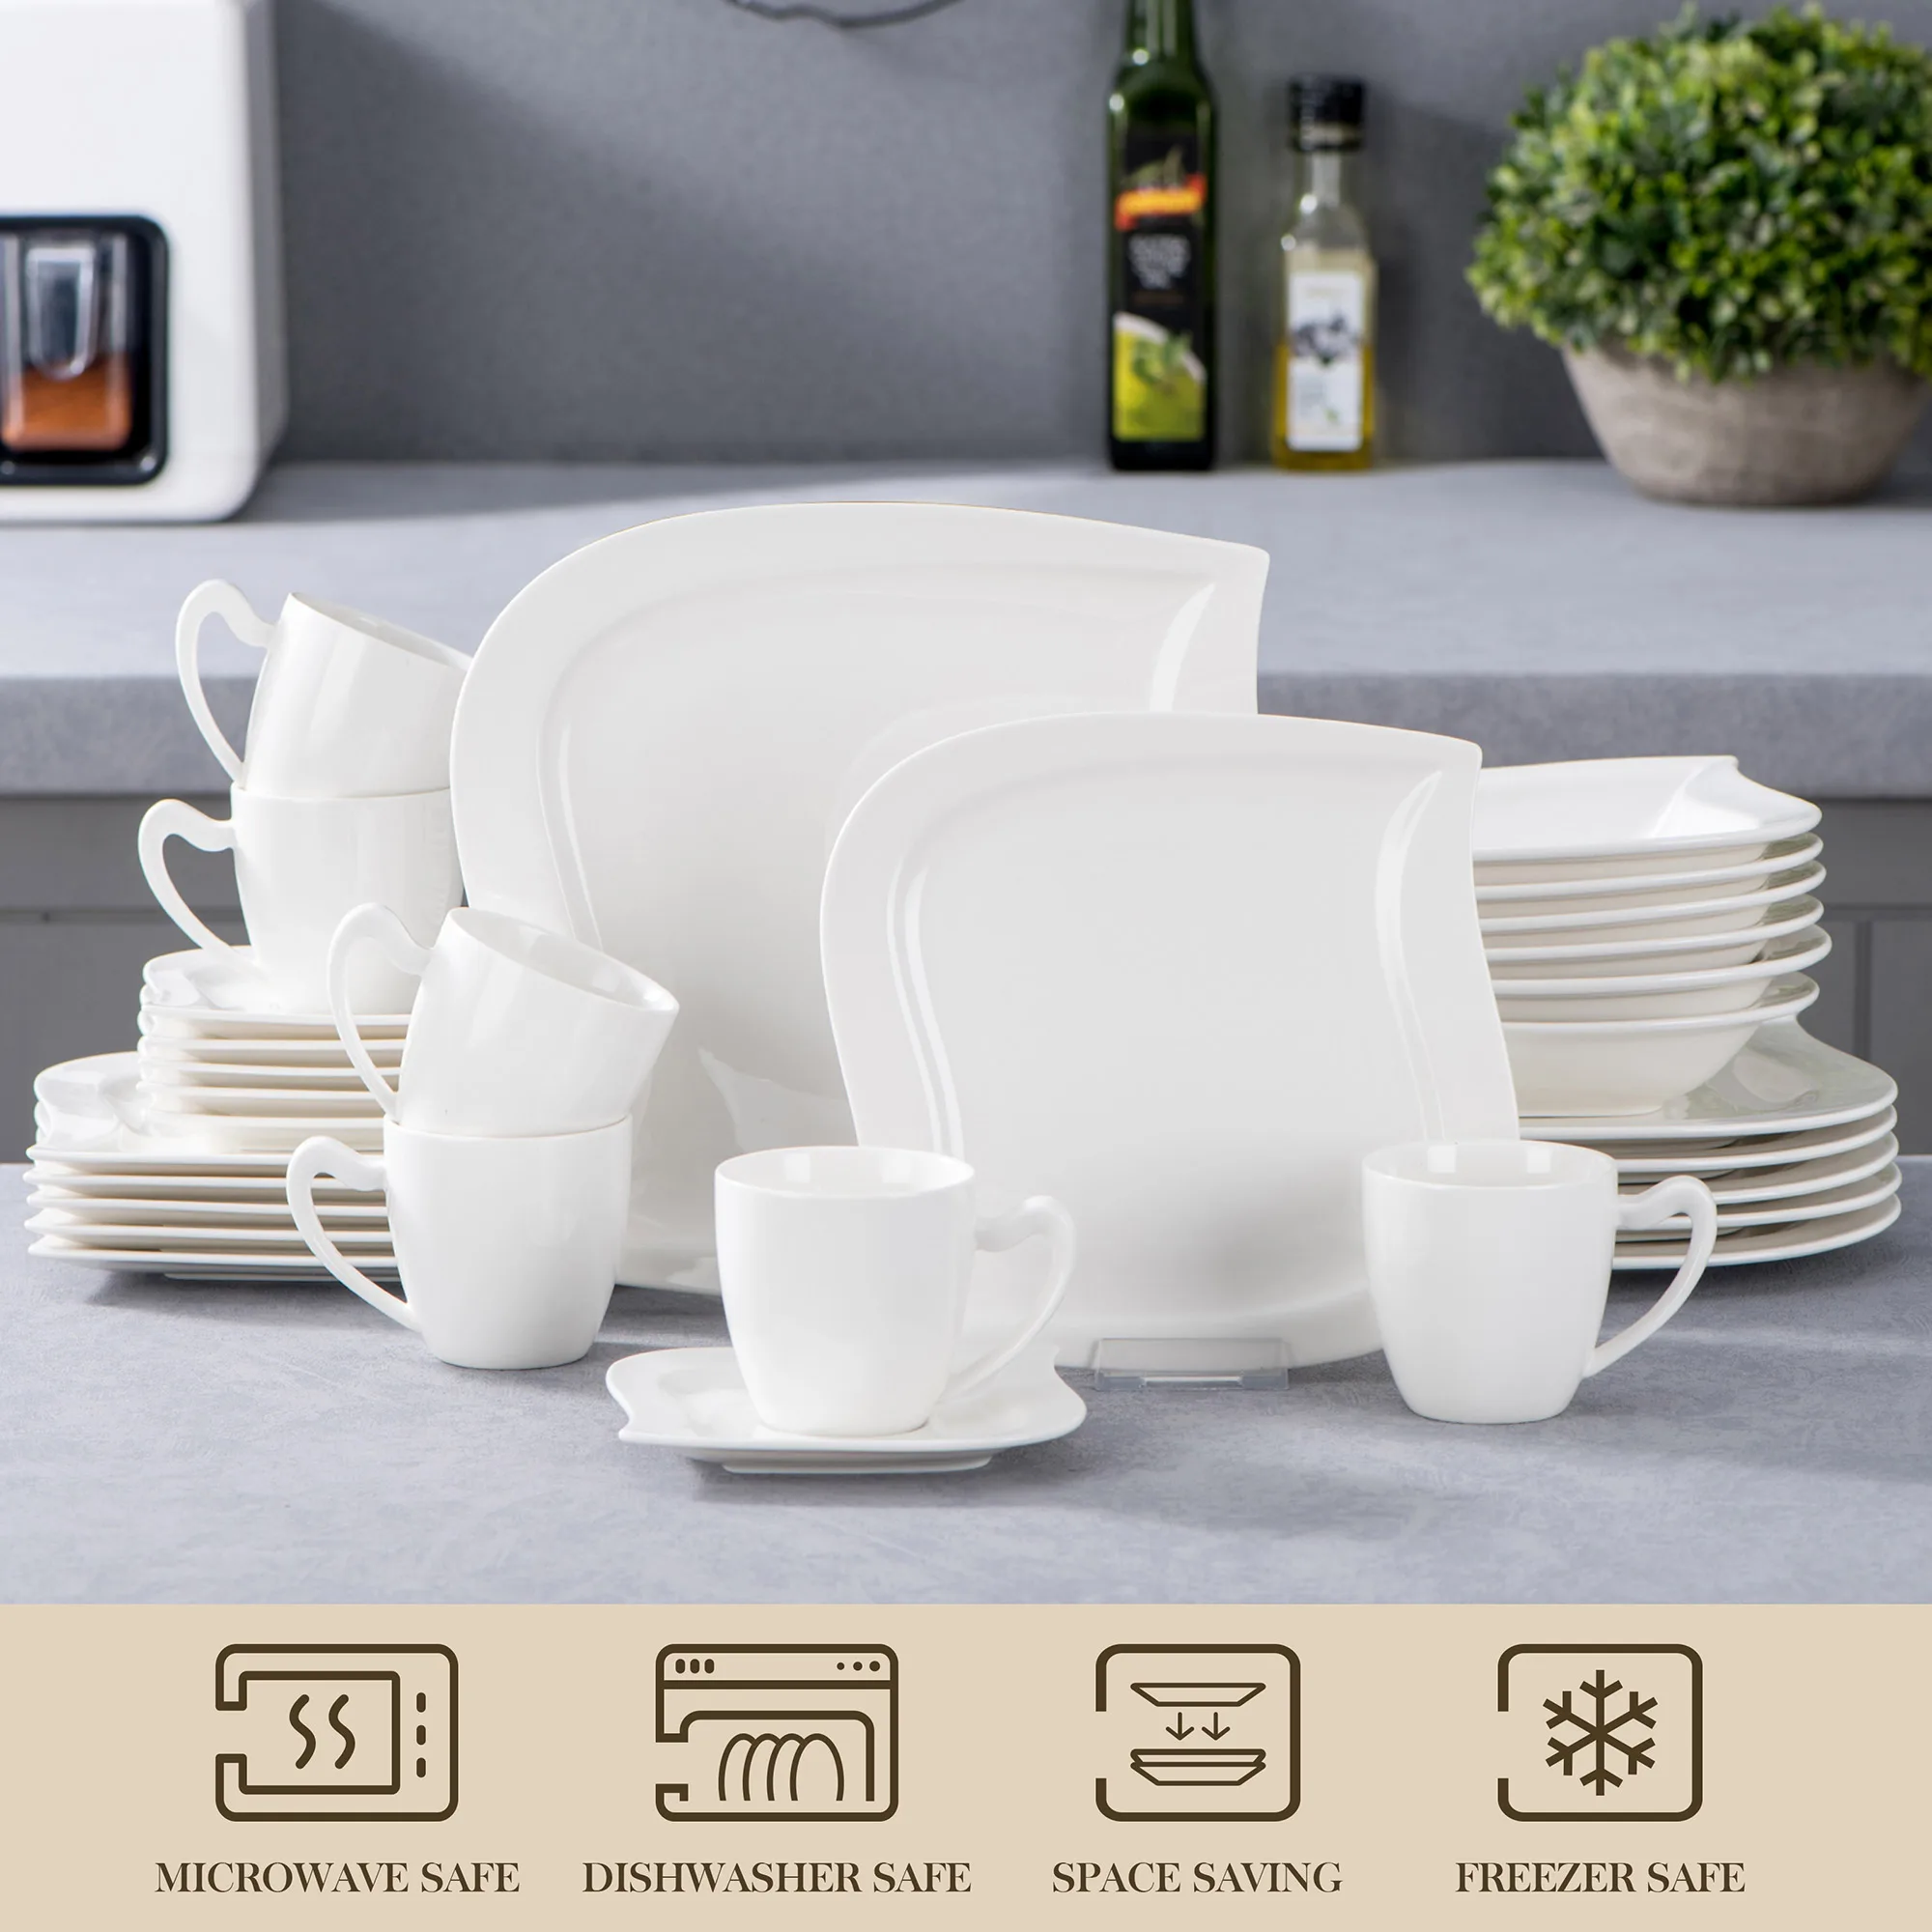 Porcelain Dinnerware Sets: Is Porcelain High Quality? – MALACASA